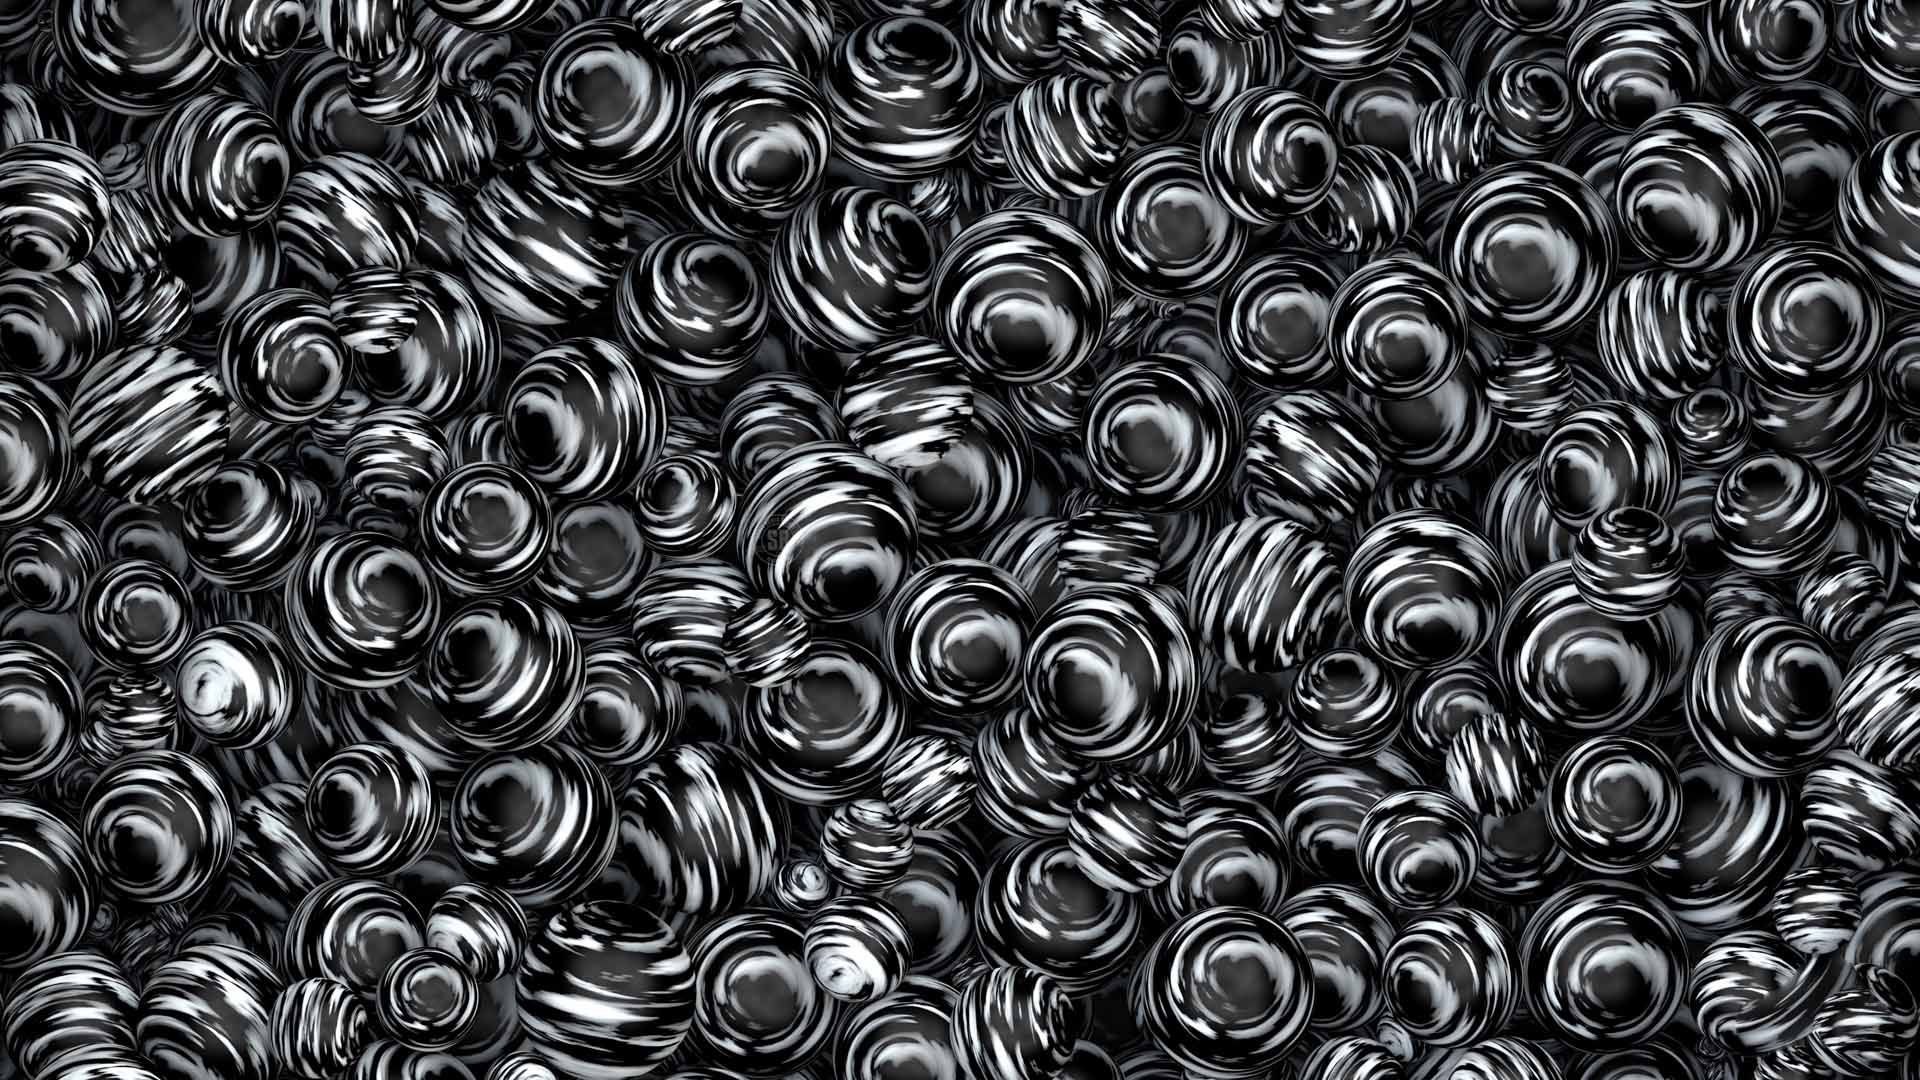 Abstract-Black-Ball-Big-Screen-Wallpaper-Art-Image.jpg